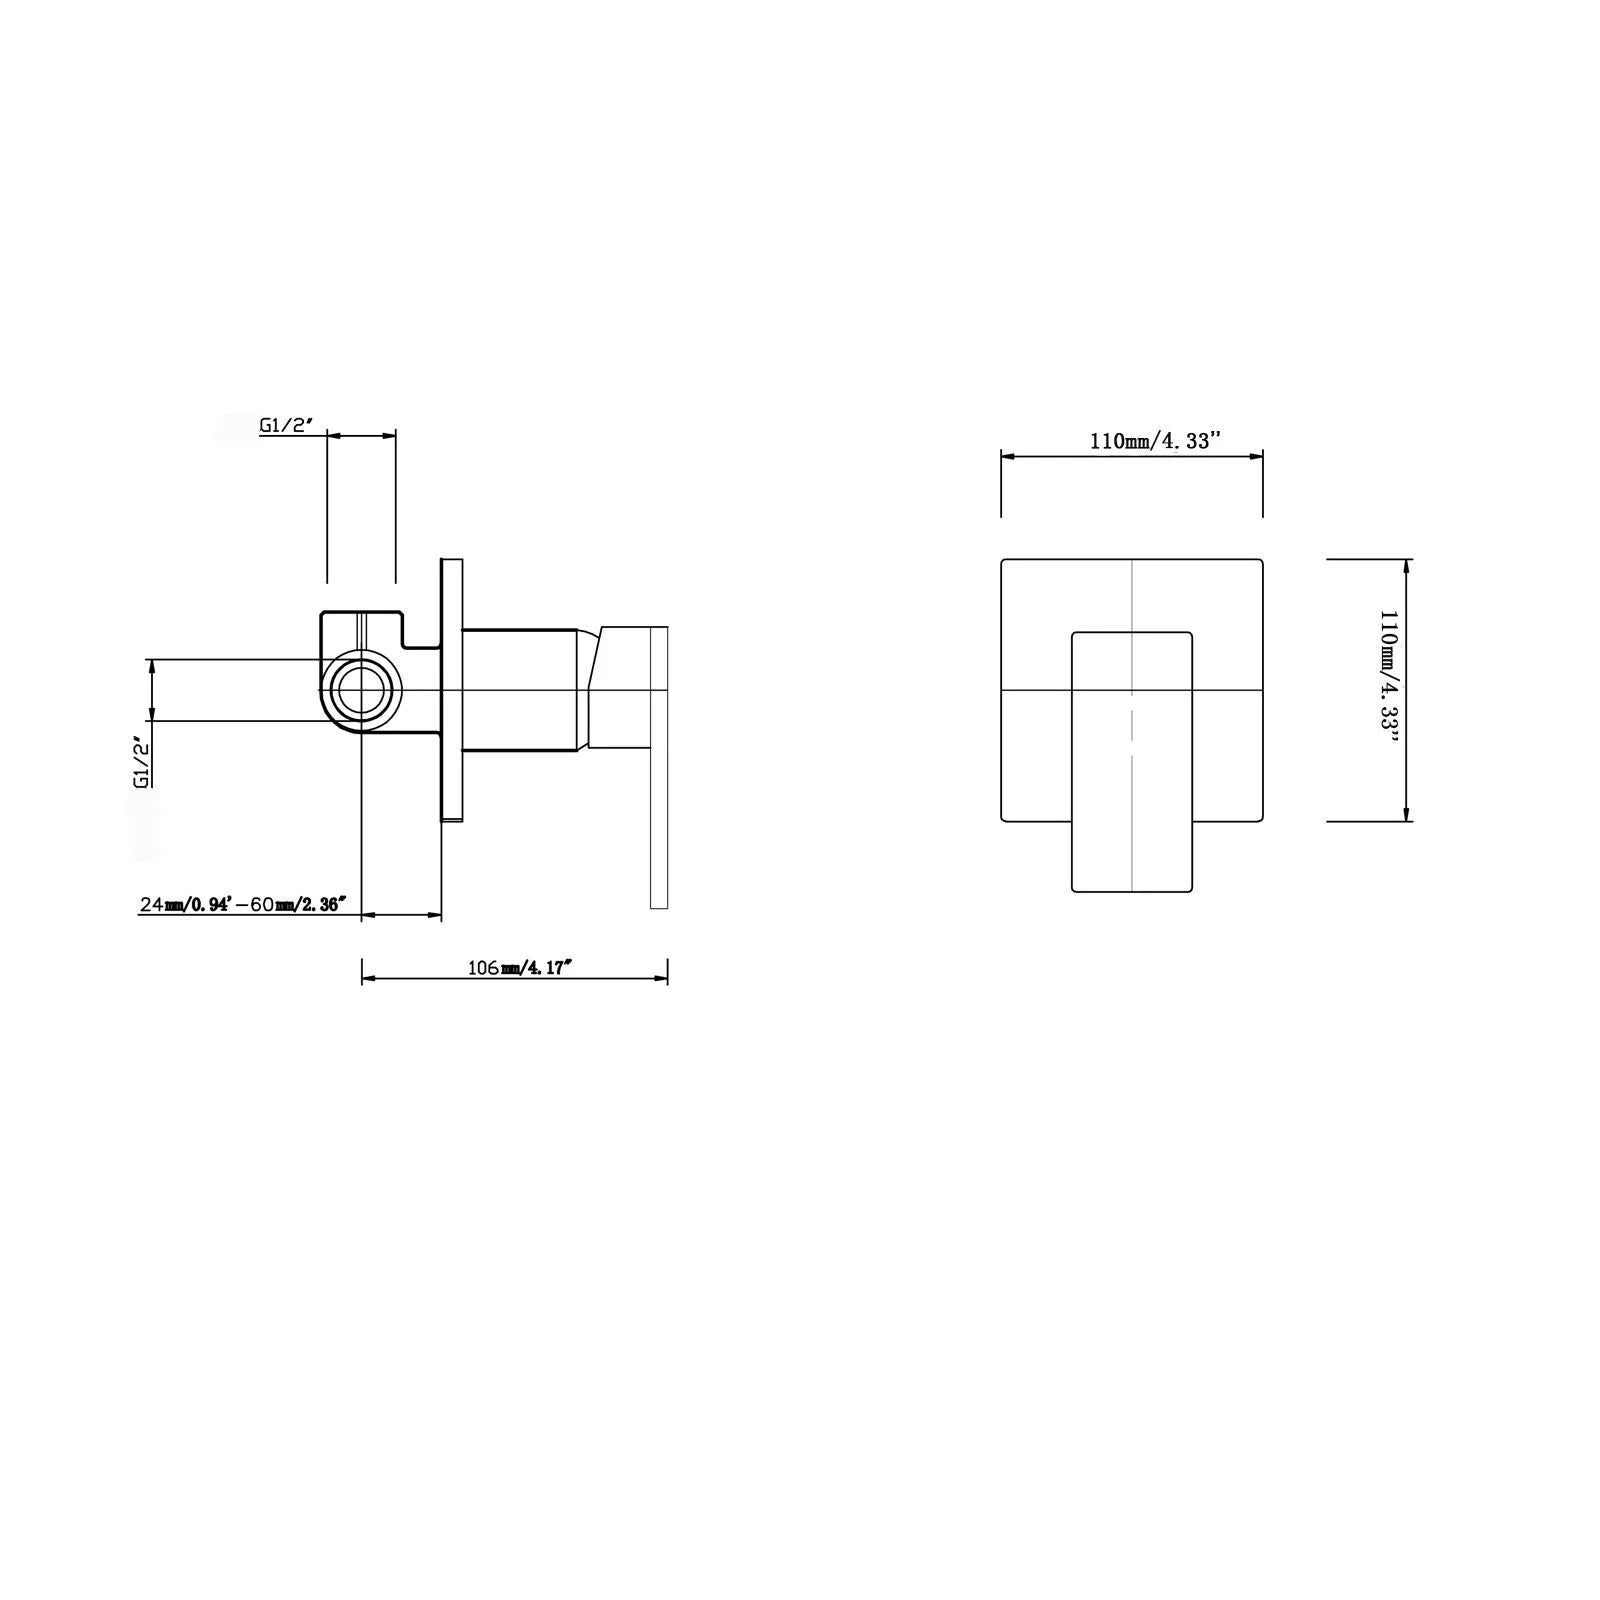 Blaze Shower Wall Mixer: Sleek Design for Modern Bathroom Spaces-Chrome-CH0106-2-ST, 2